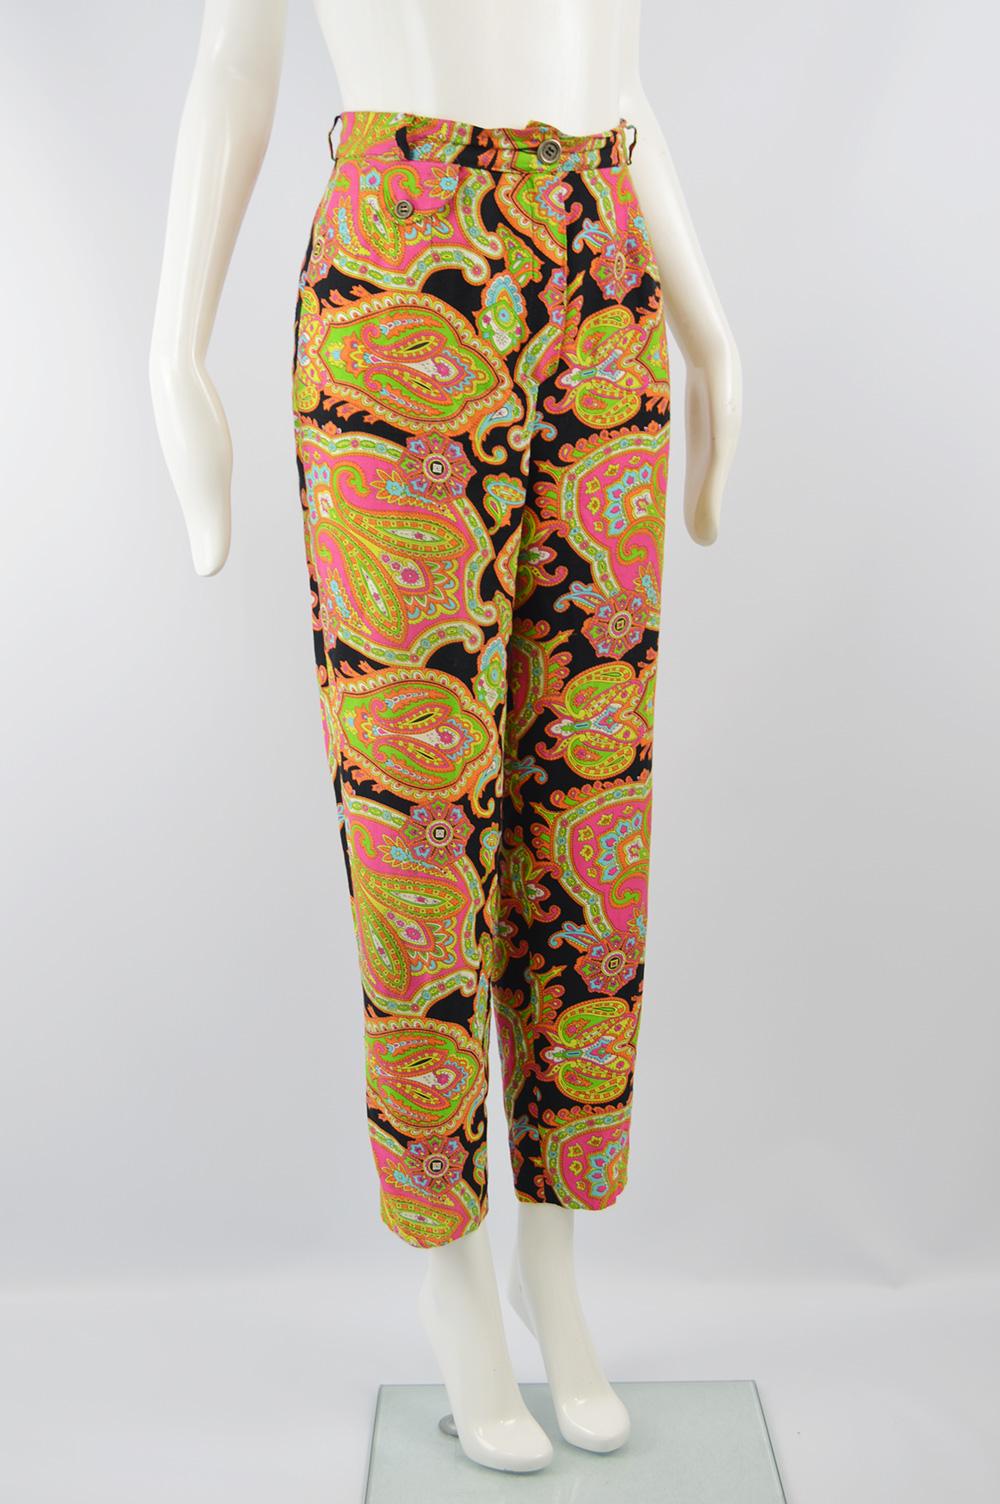 90s patterned pants